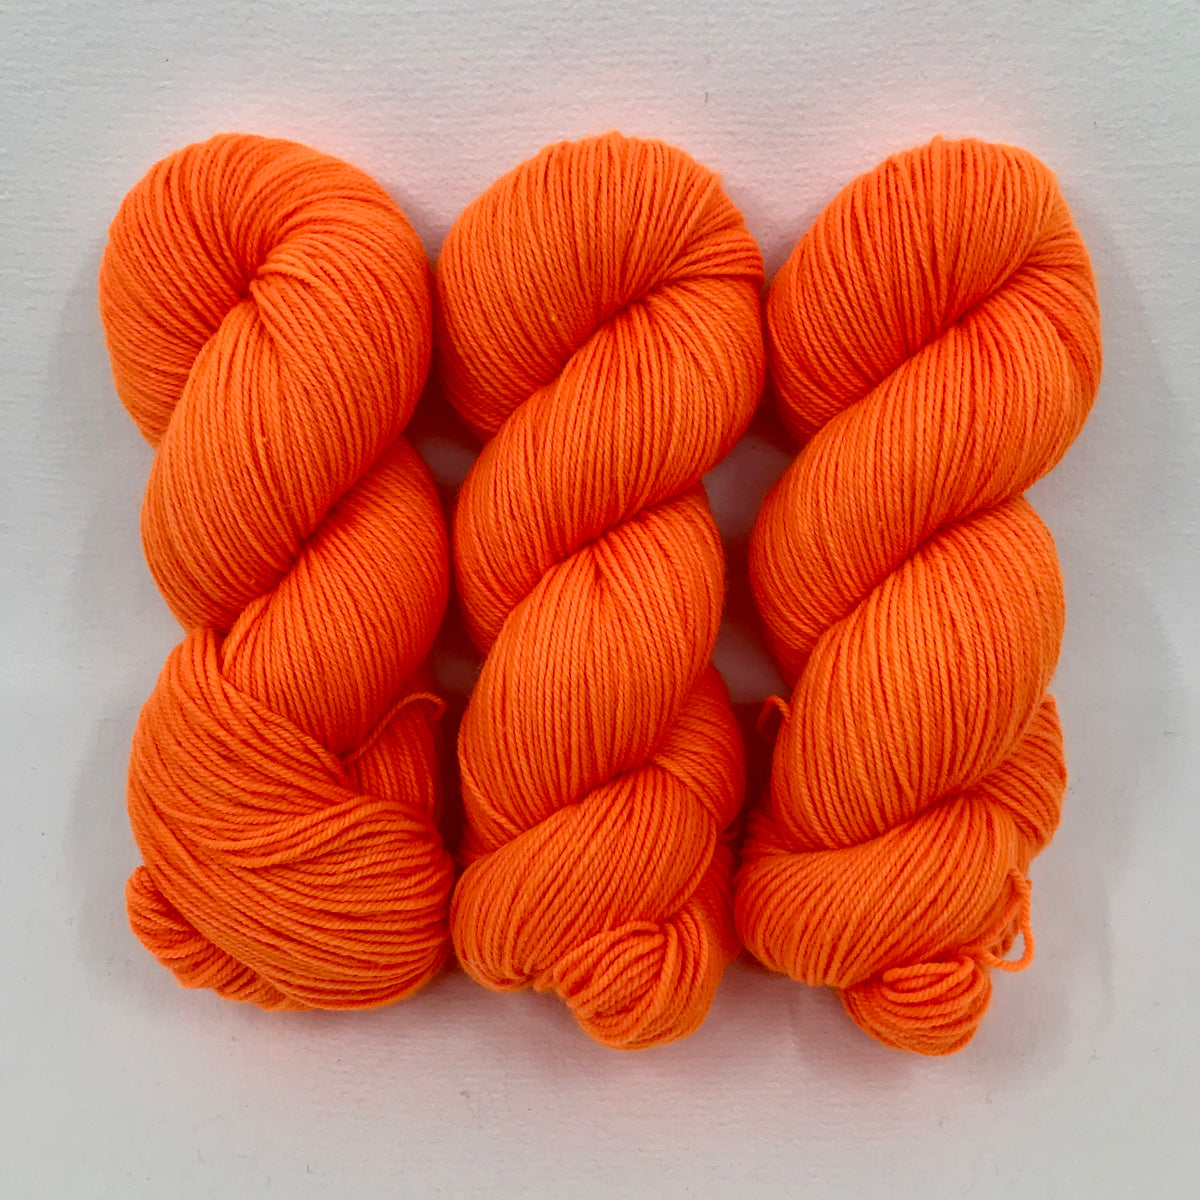 Orange Light Sabre - Merino DK / Light Worsted - Dyed Stock